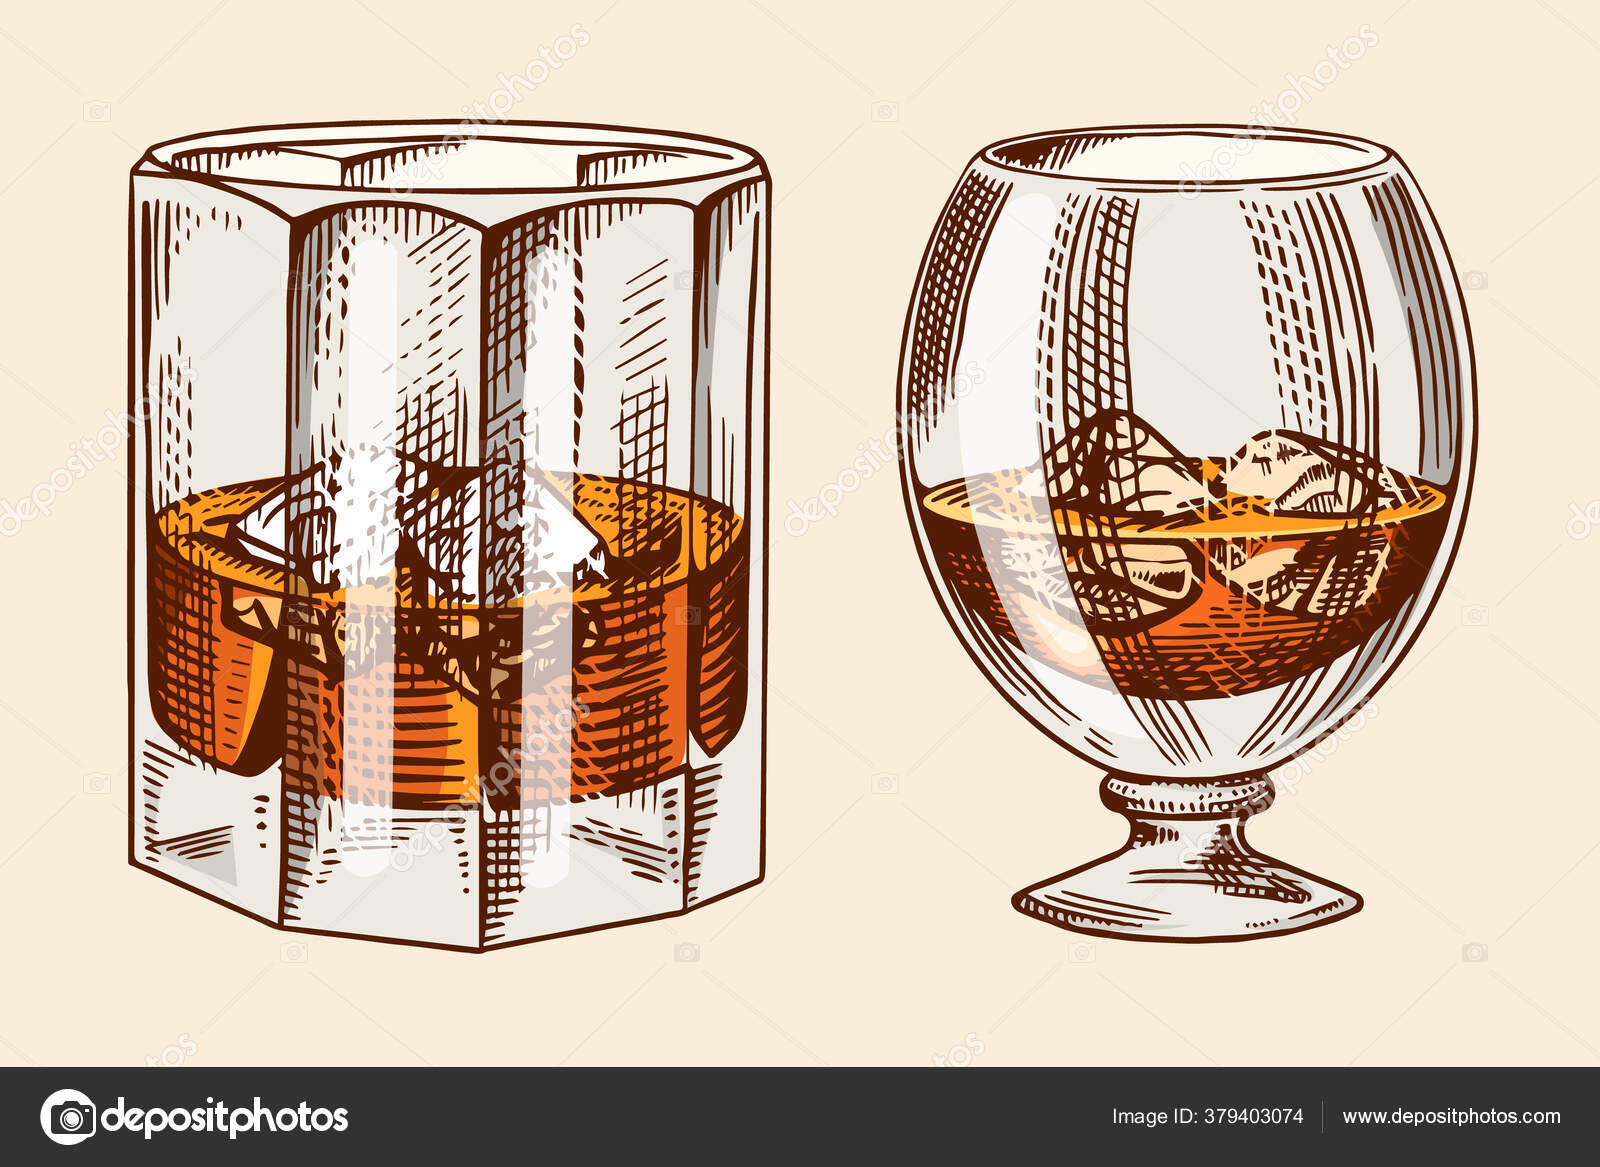 https://st4.depositphotos.com/9771418/37940/v/1600/depositphotos_379403074-stock-illustration-vintage-glass-of-whiskey-retro.jpg